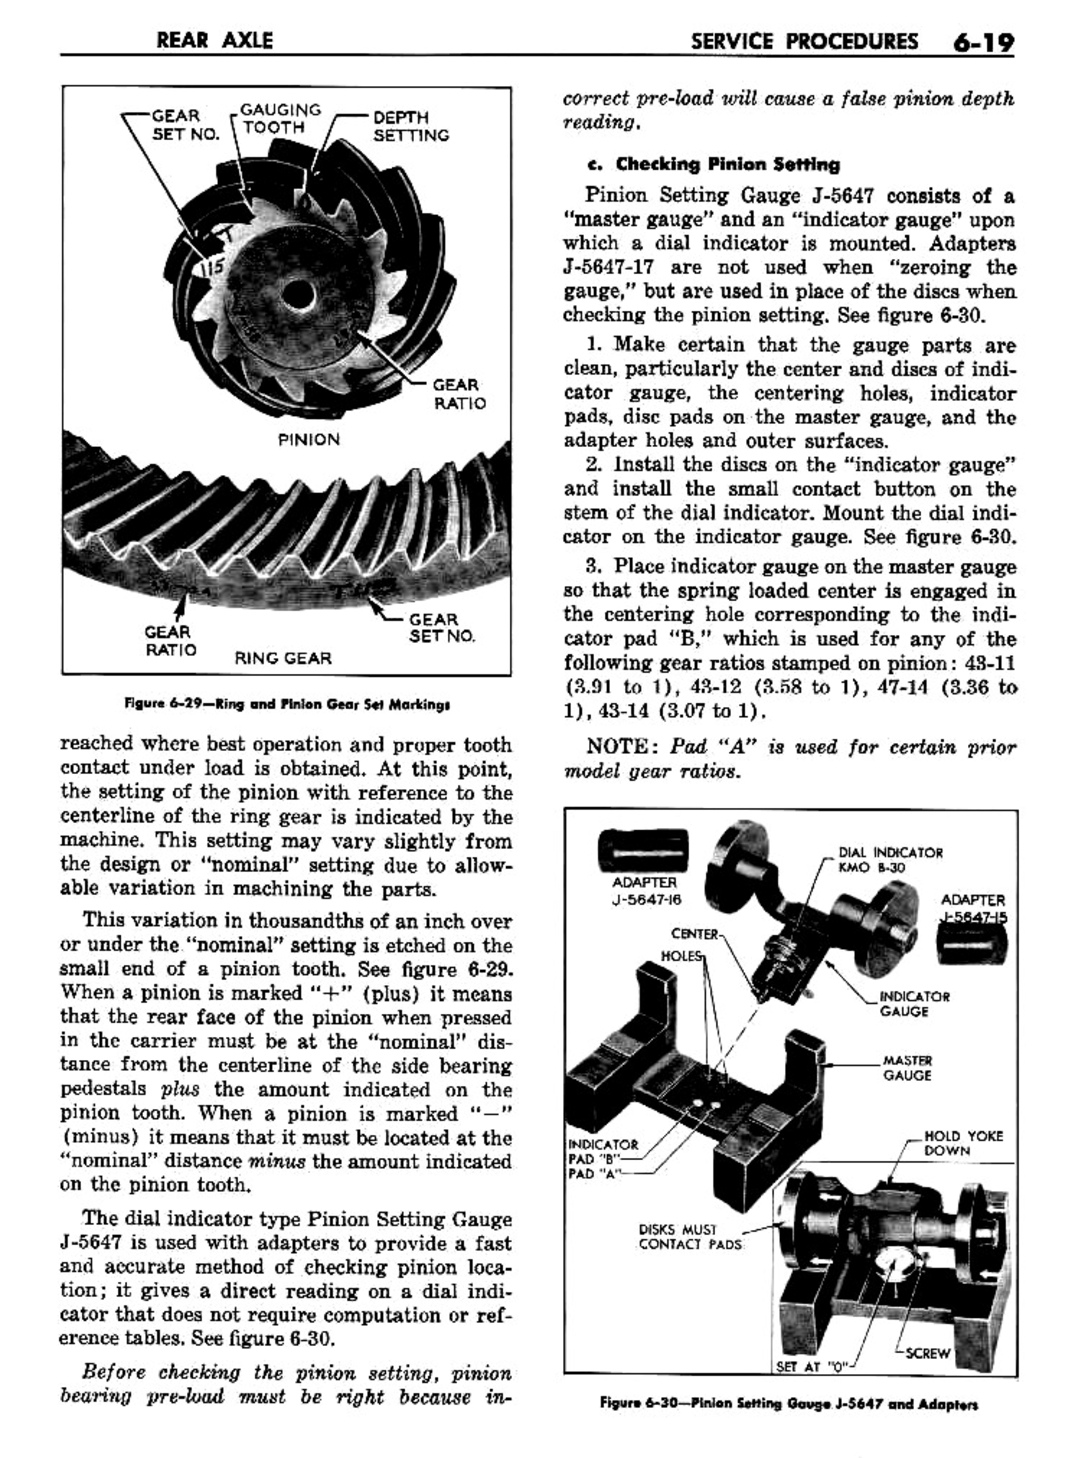 n_07 1957 Buick Shop Manual - Rear Axle-019-019.jpg